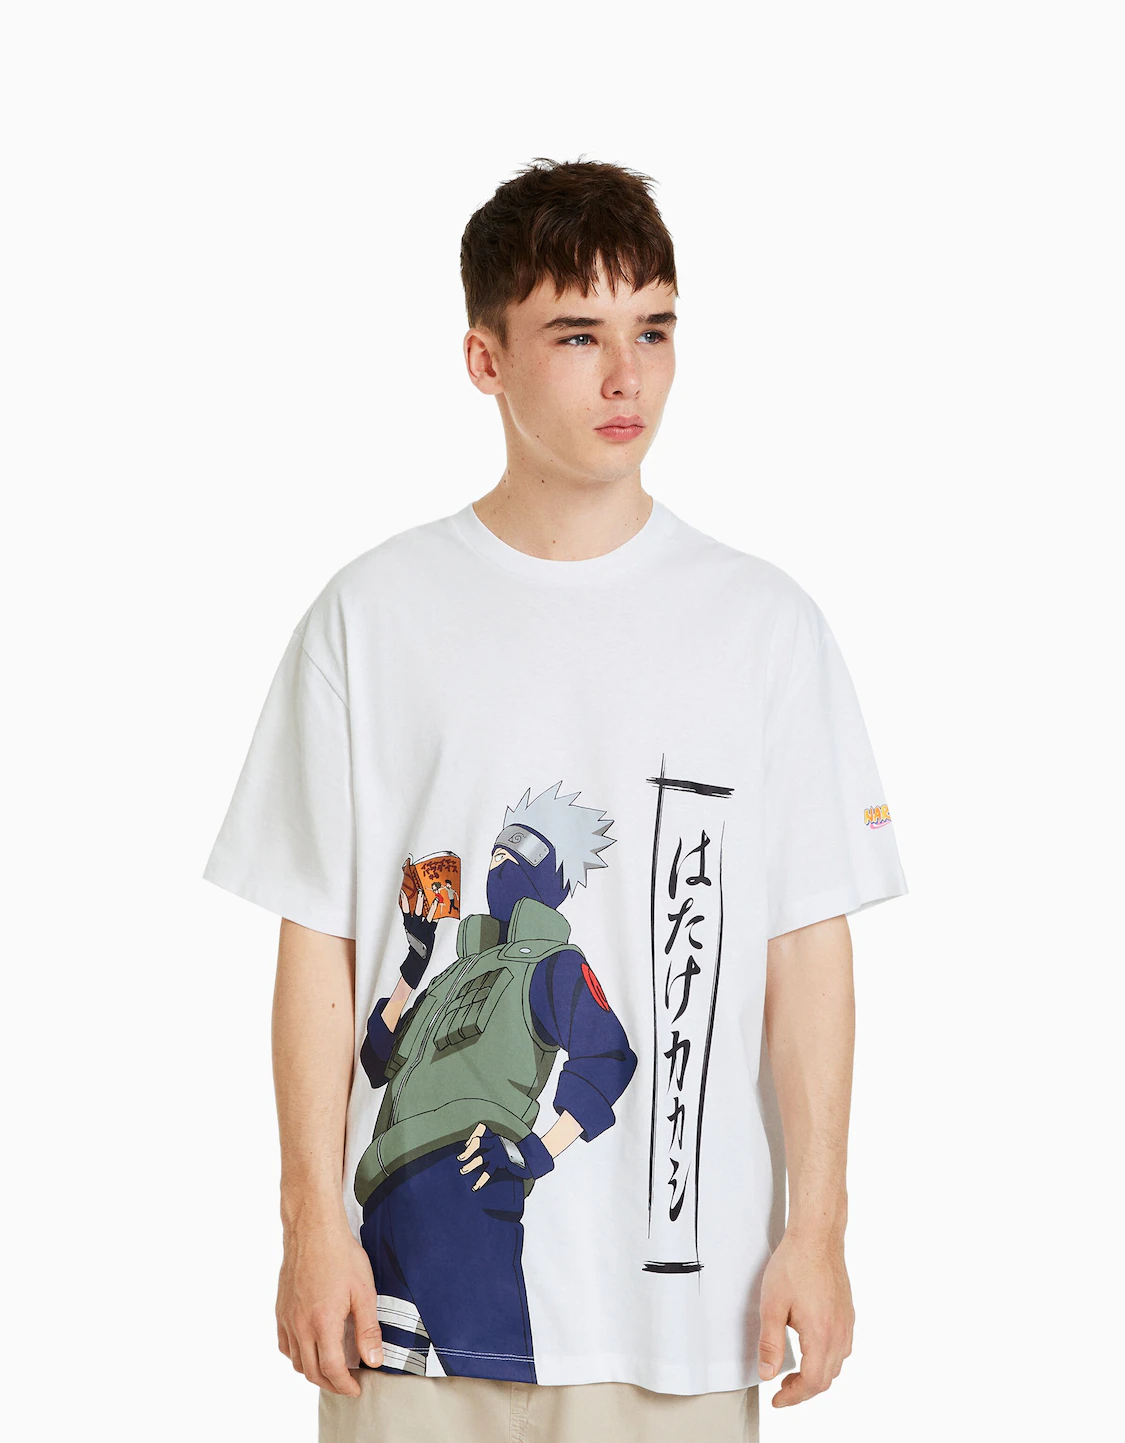 Camiseta Naruto corta boxy fit print - Camisetas - Hombre |